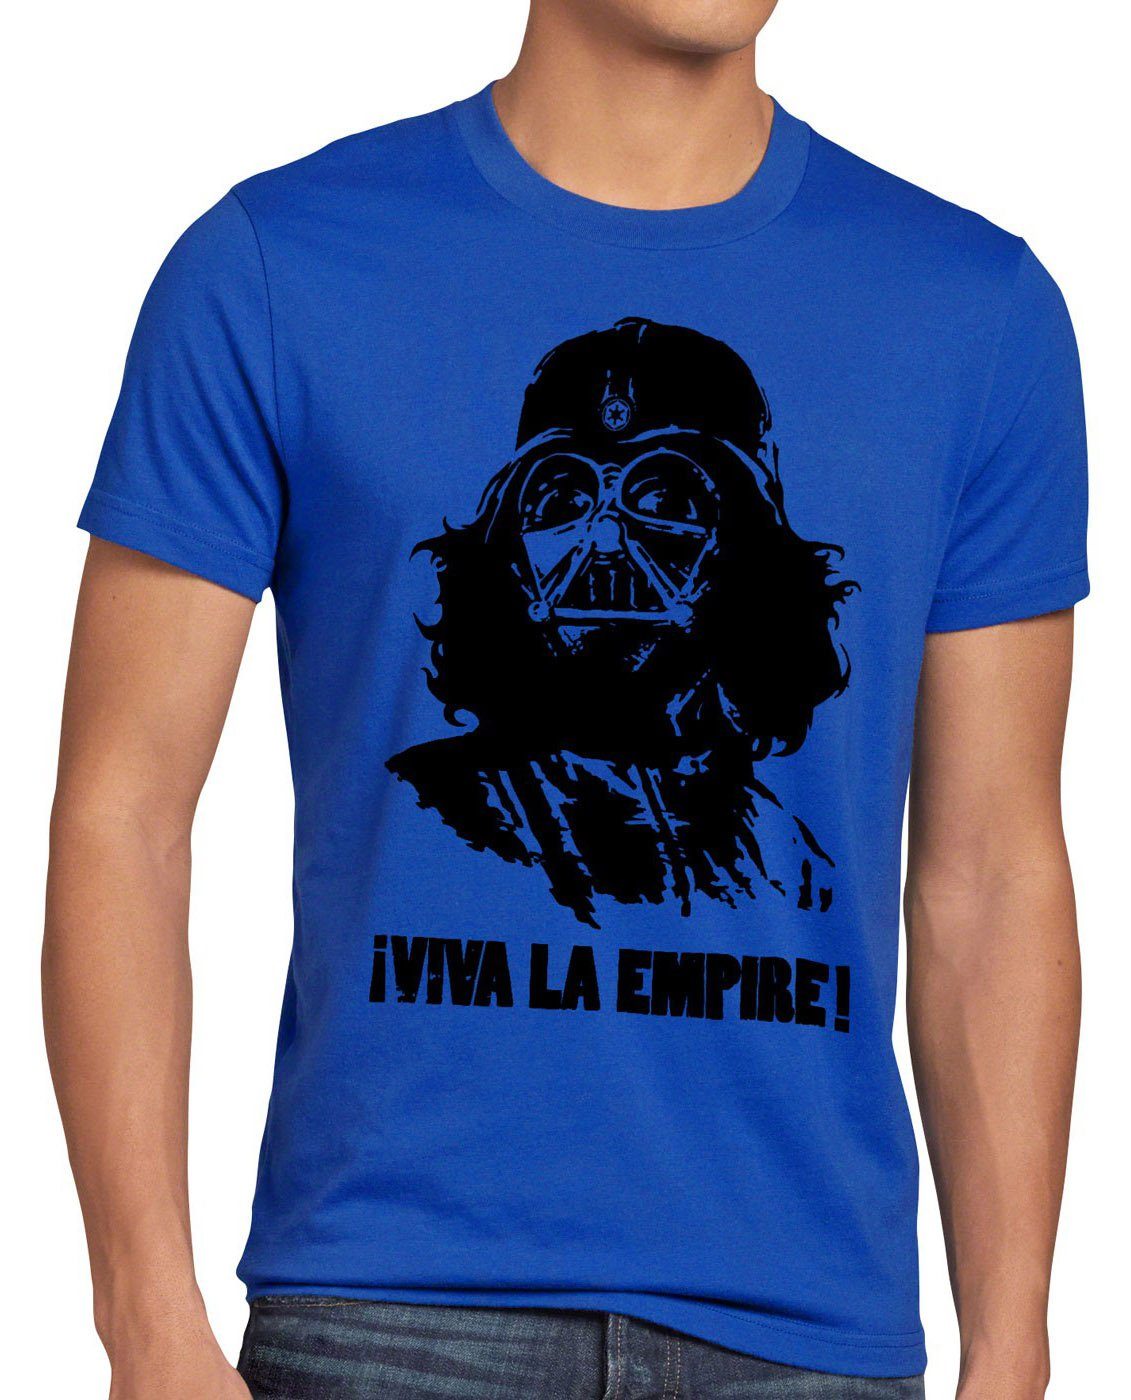 style3 Print-Shirt Herren wars vader kuba guevara che revolution grün Viva T-Shirt Imperium darth star